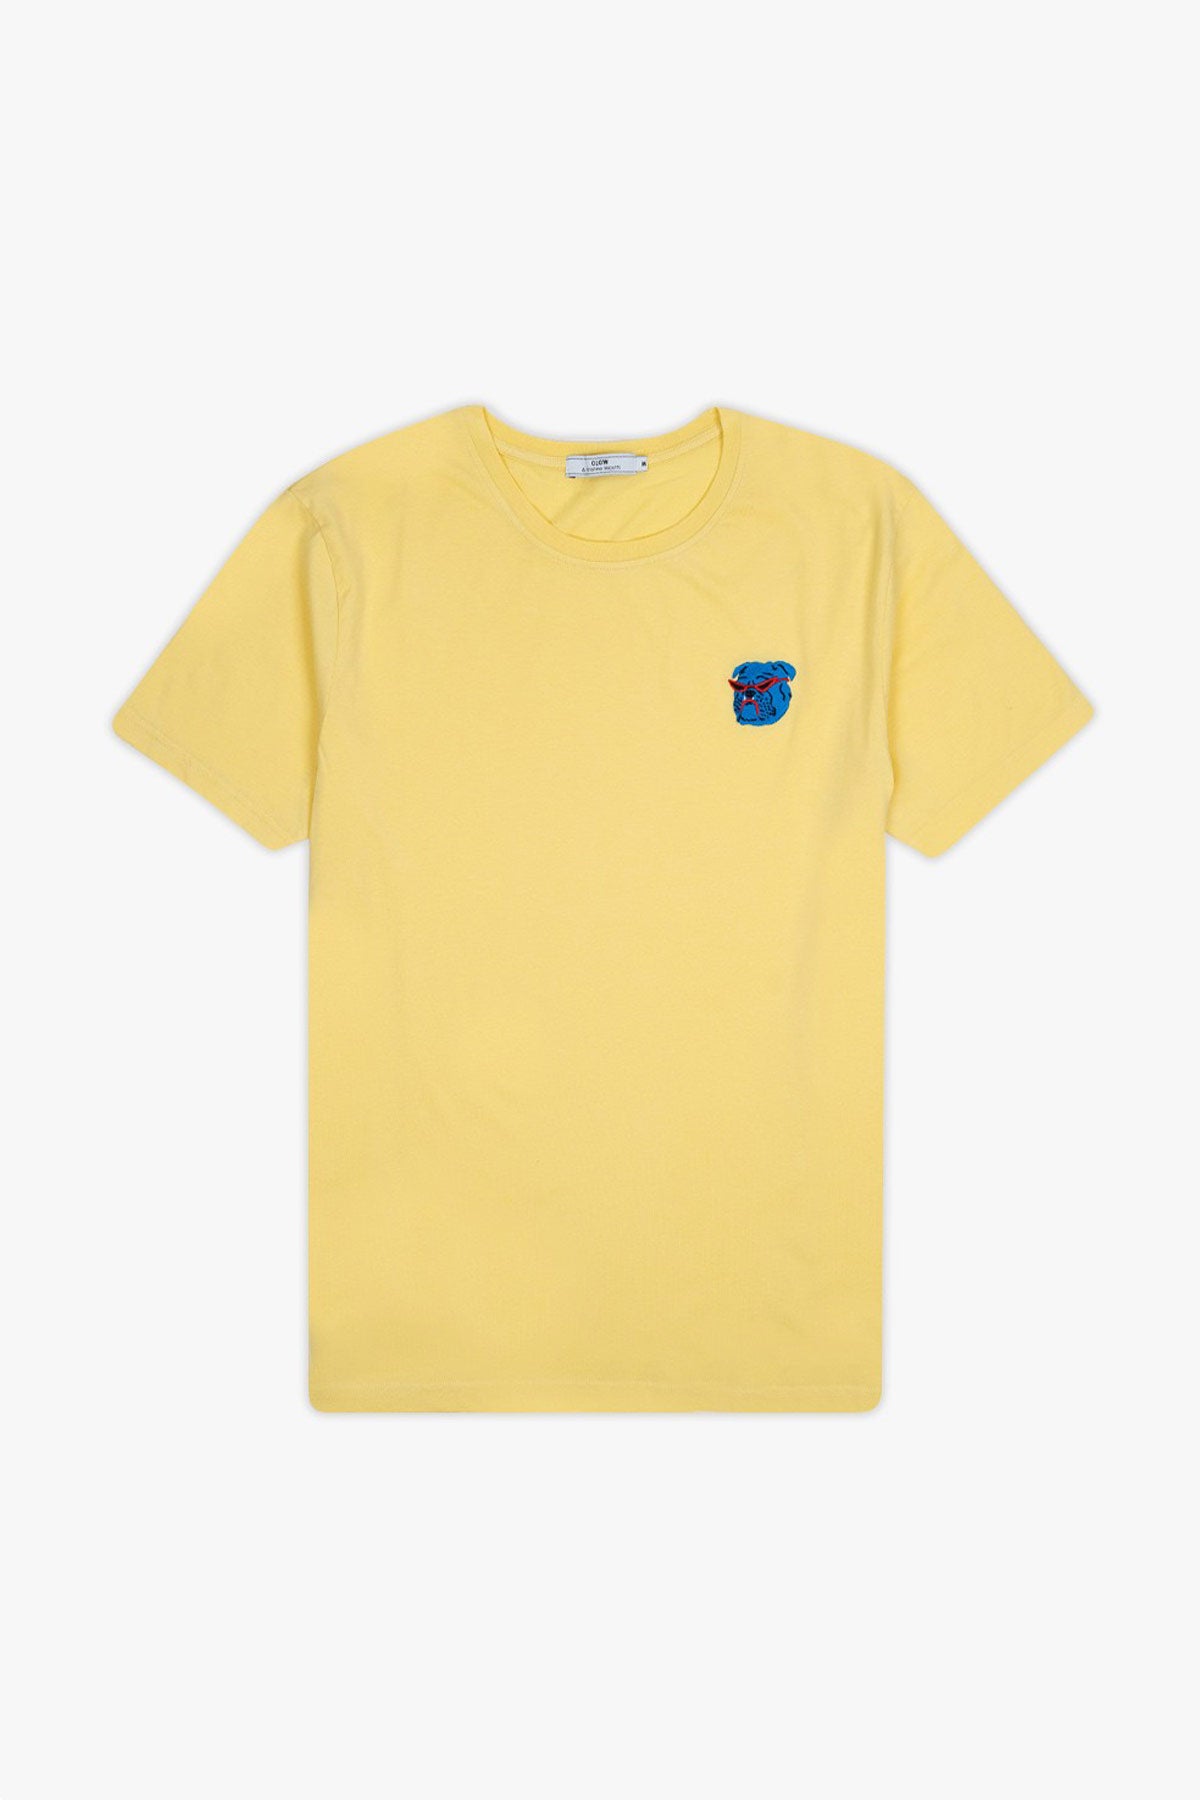 T-shirt Bulldog - Jaune pastel - Olow